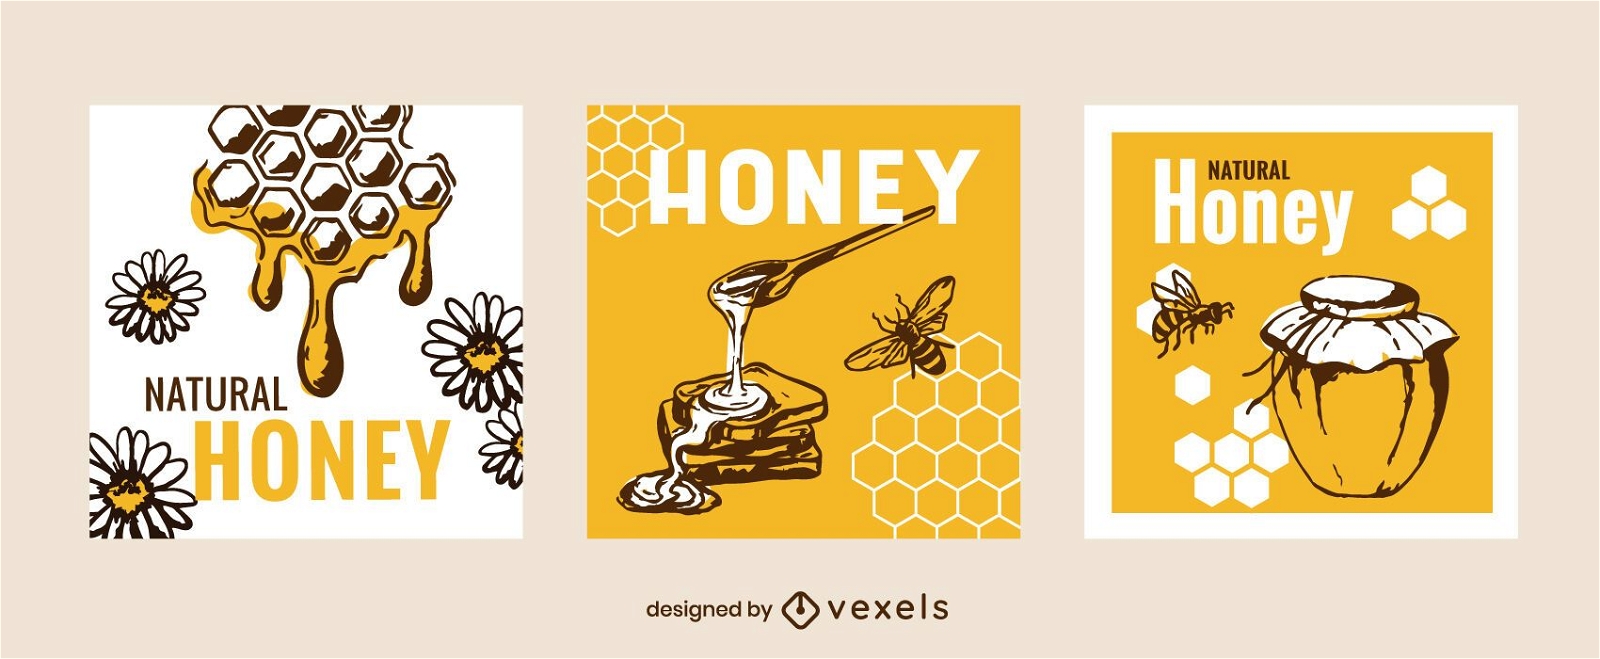 Conjunto de banner quadrado de mel natural